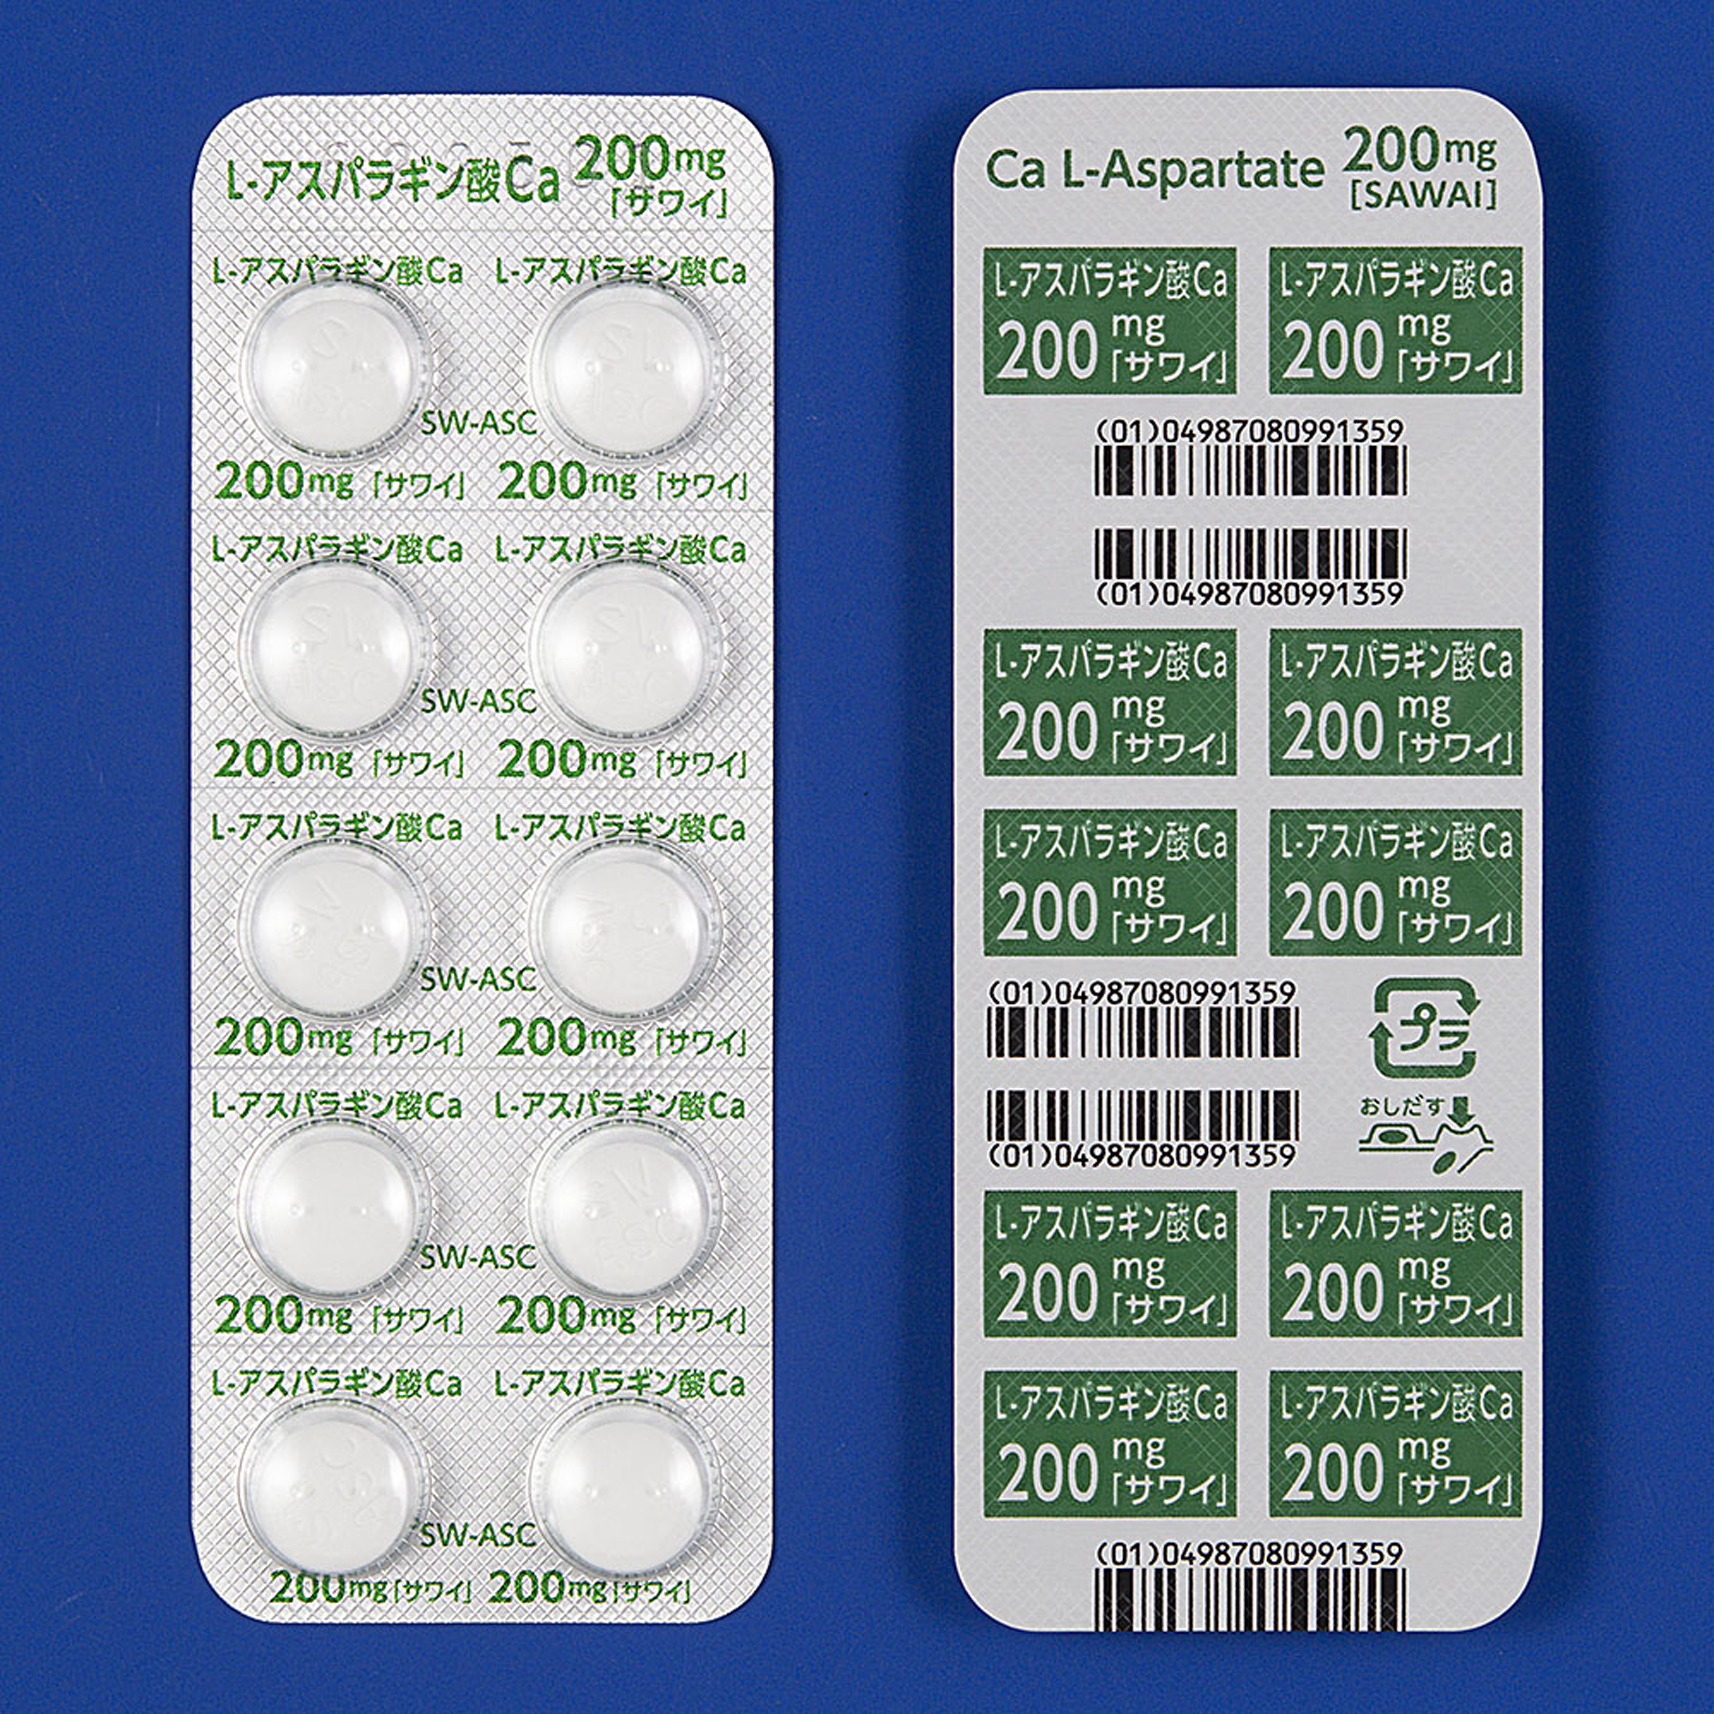 L-アスパラギン酸Ca錠200mg「サワイ」の包装画像2